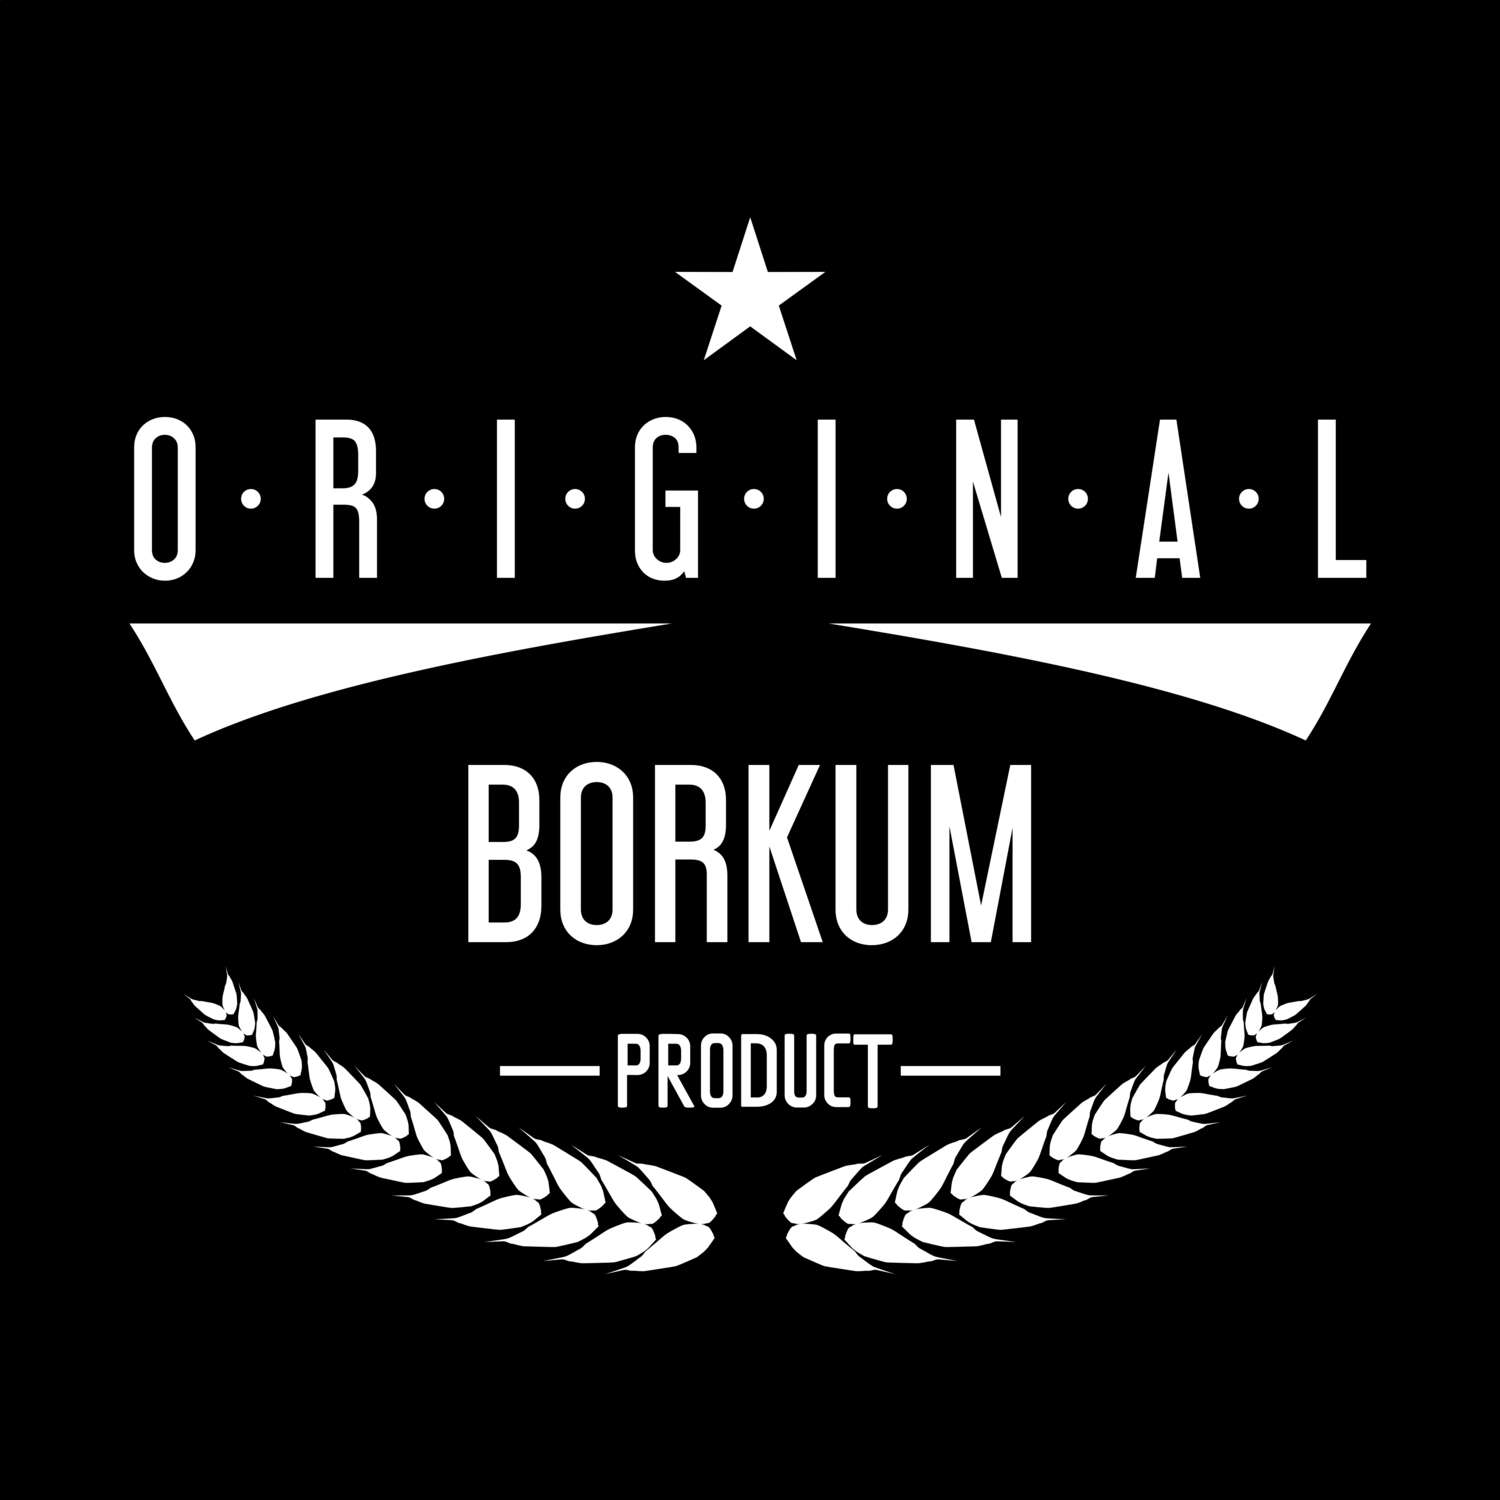 Borkum T-Shirt »Original Product«